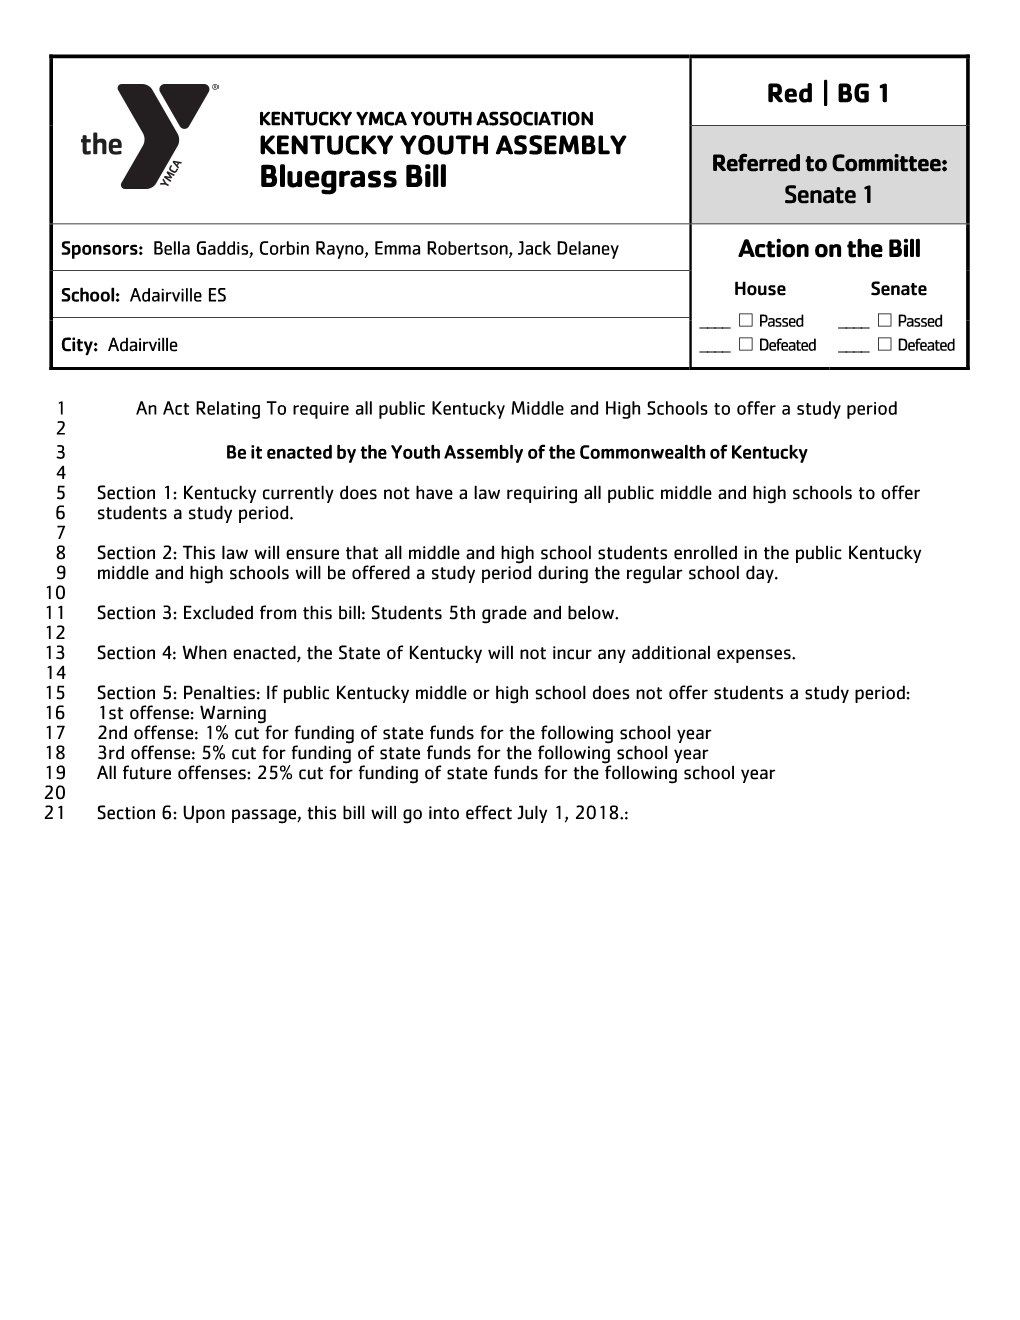 Bluegrass Bill Referred to Committee: Senate 1